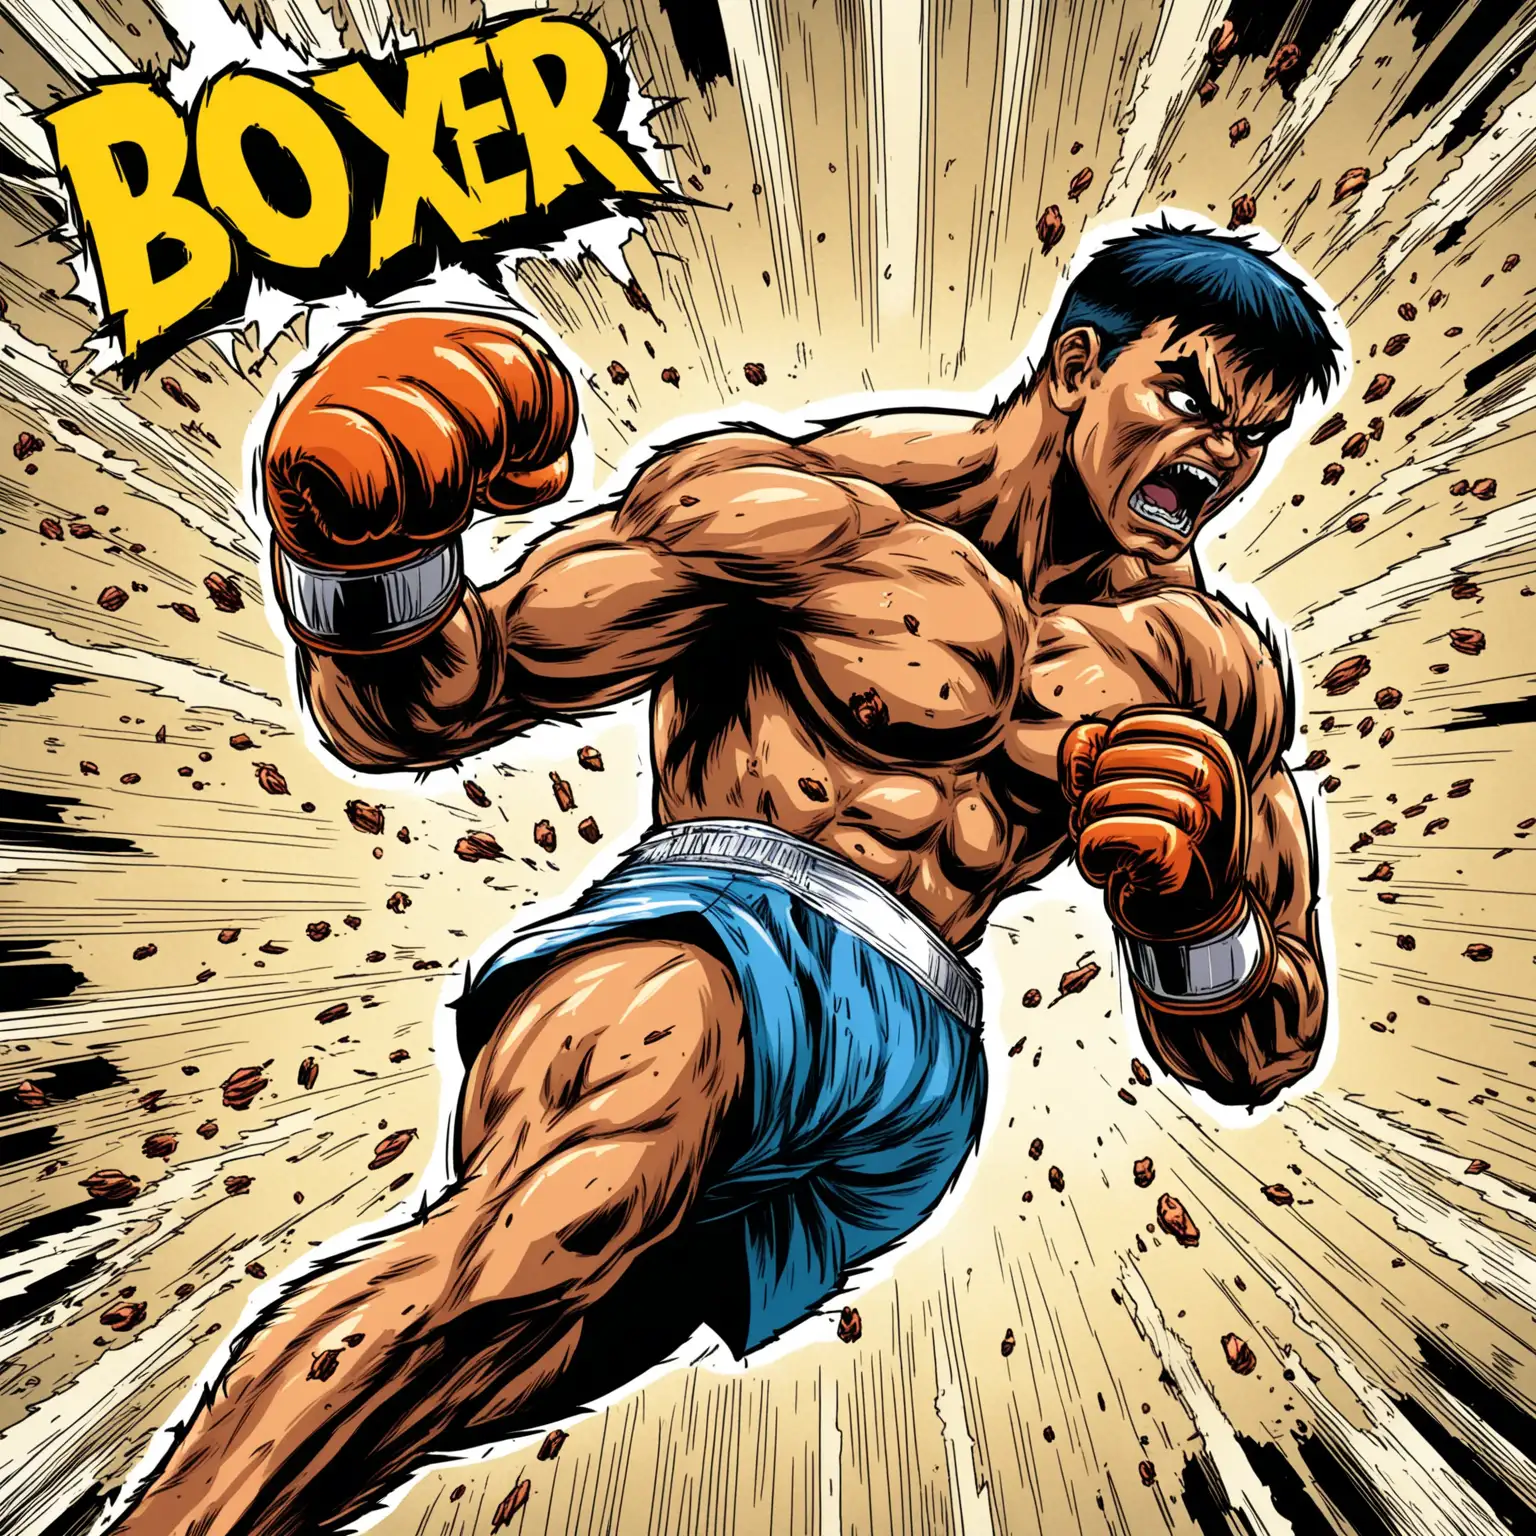 Explosive Power Comic Book Style Boxer Delivers Devastating Hook